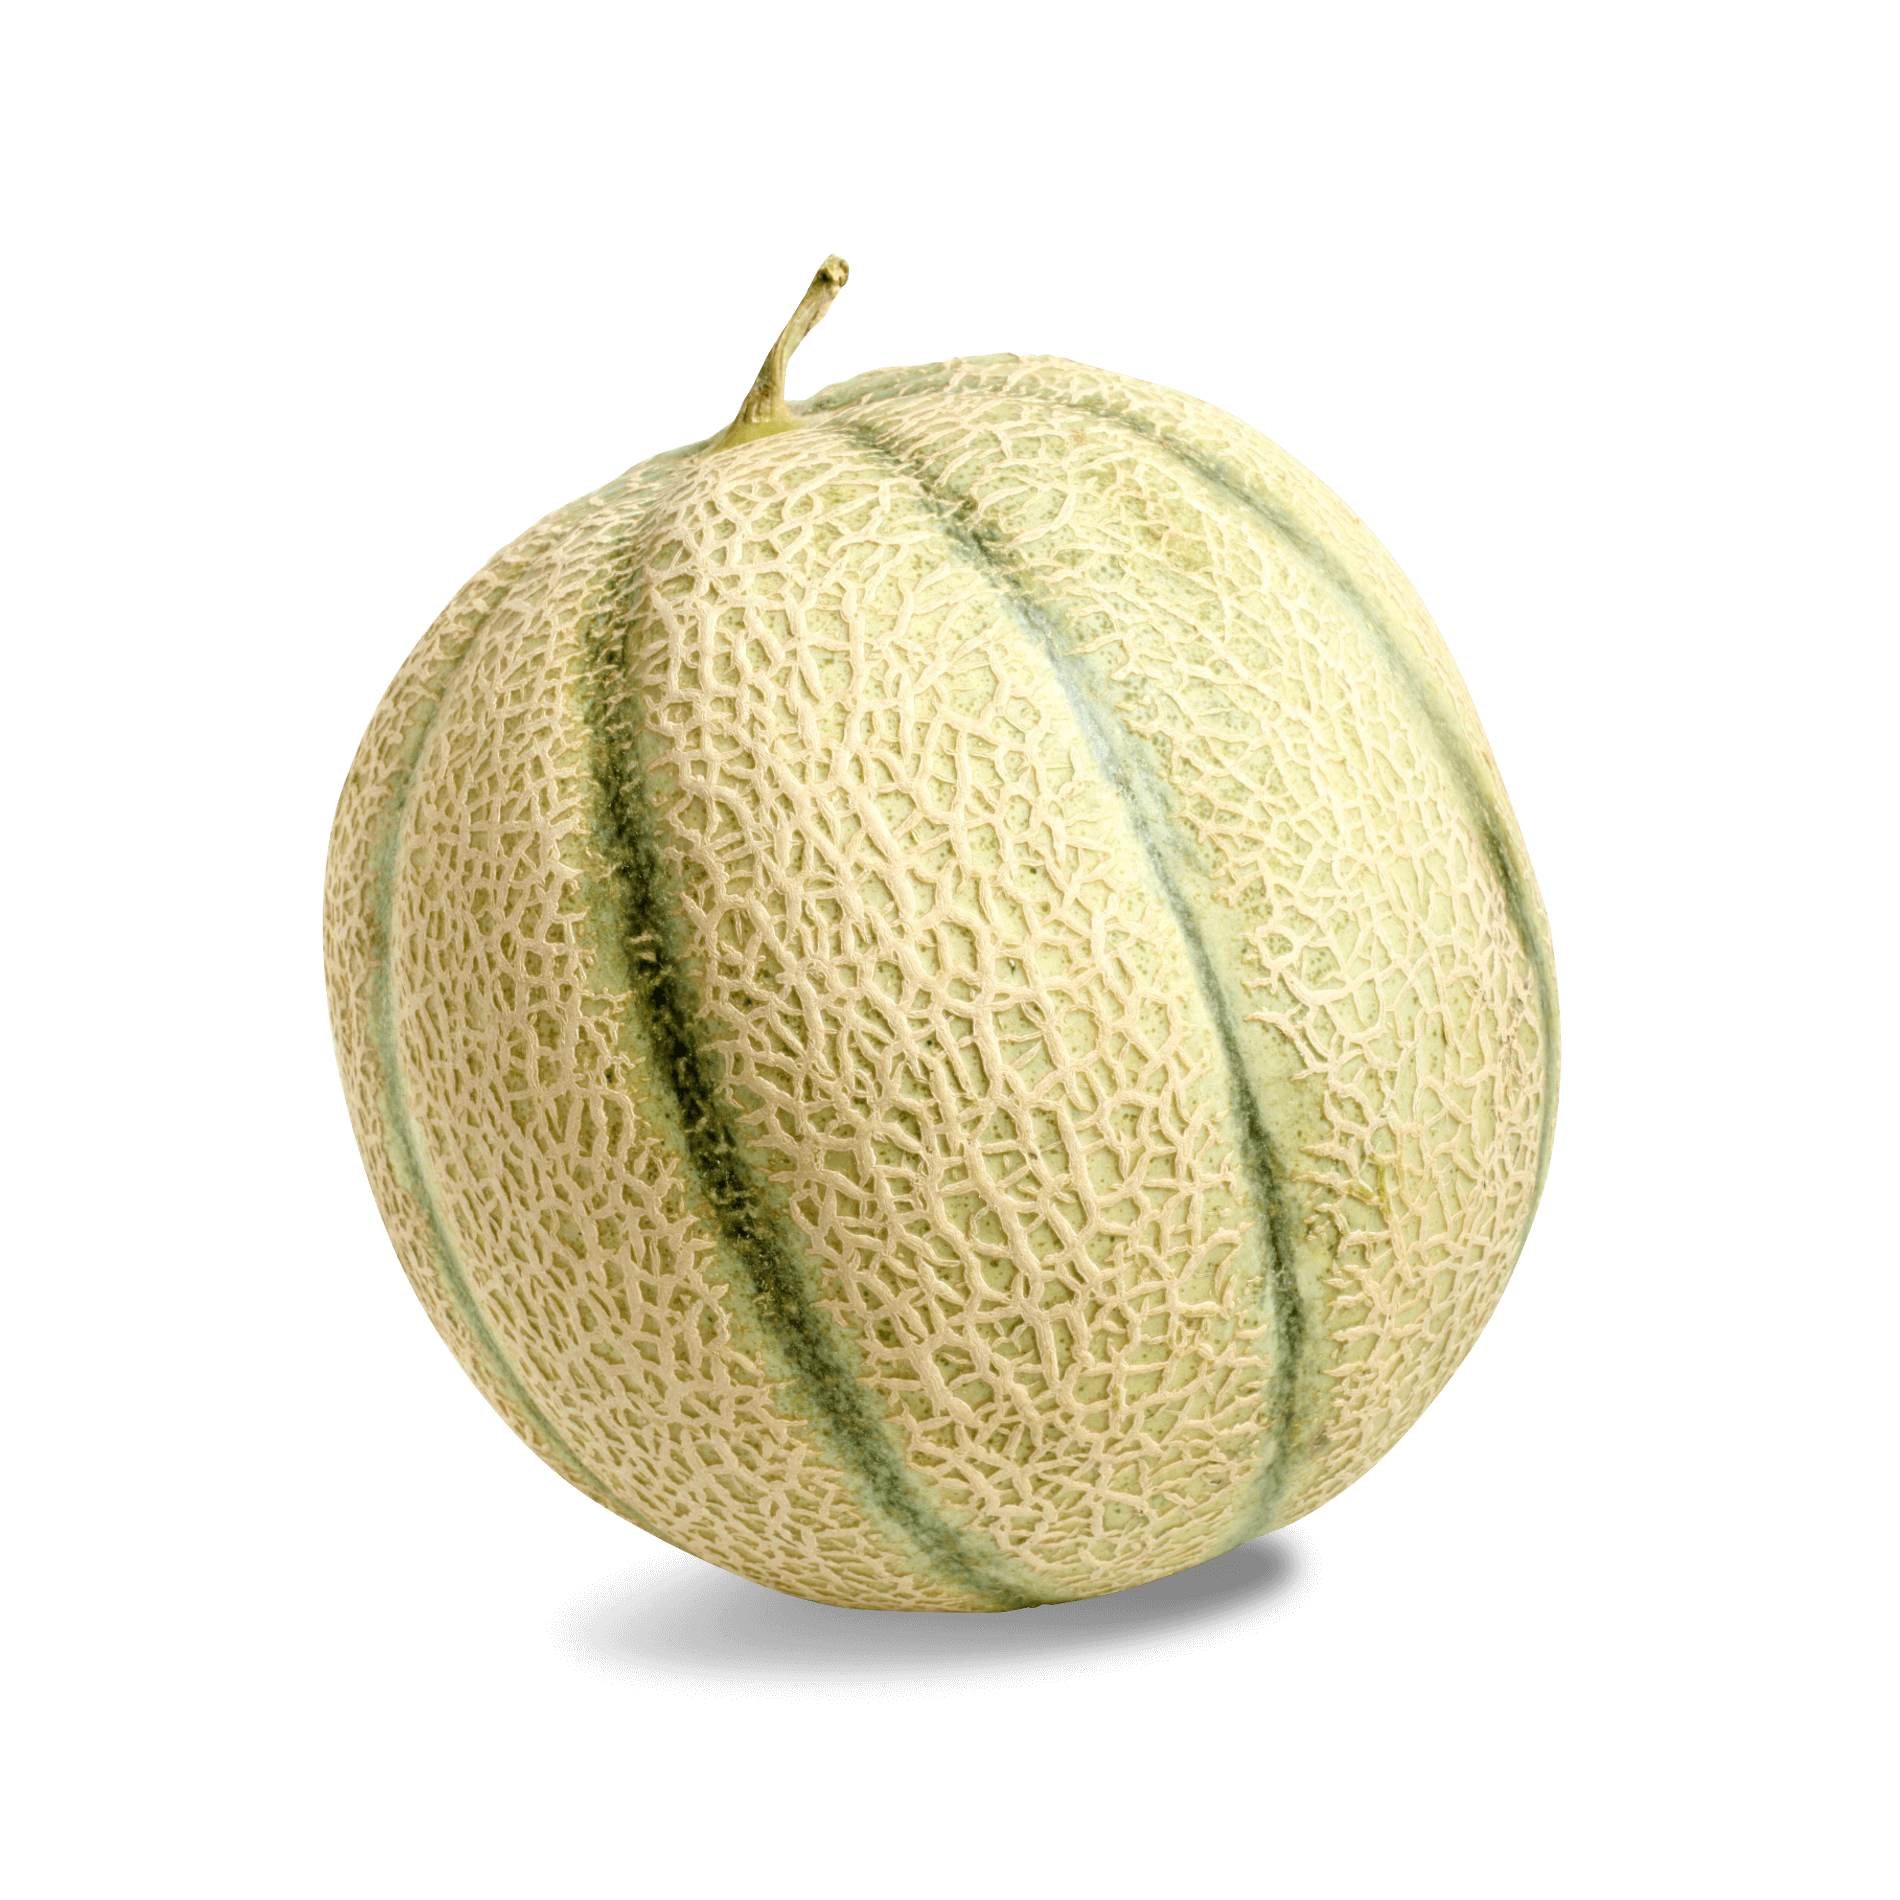 Melone 'Cantaloupe'